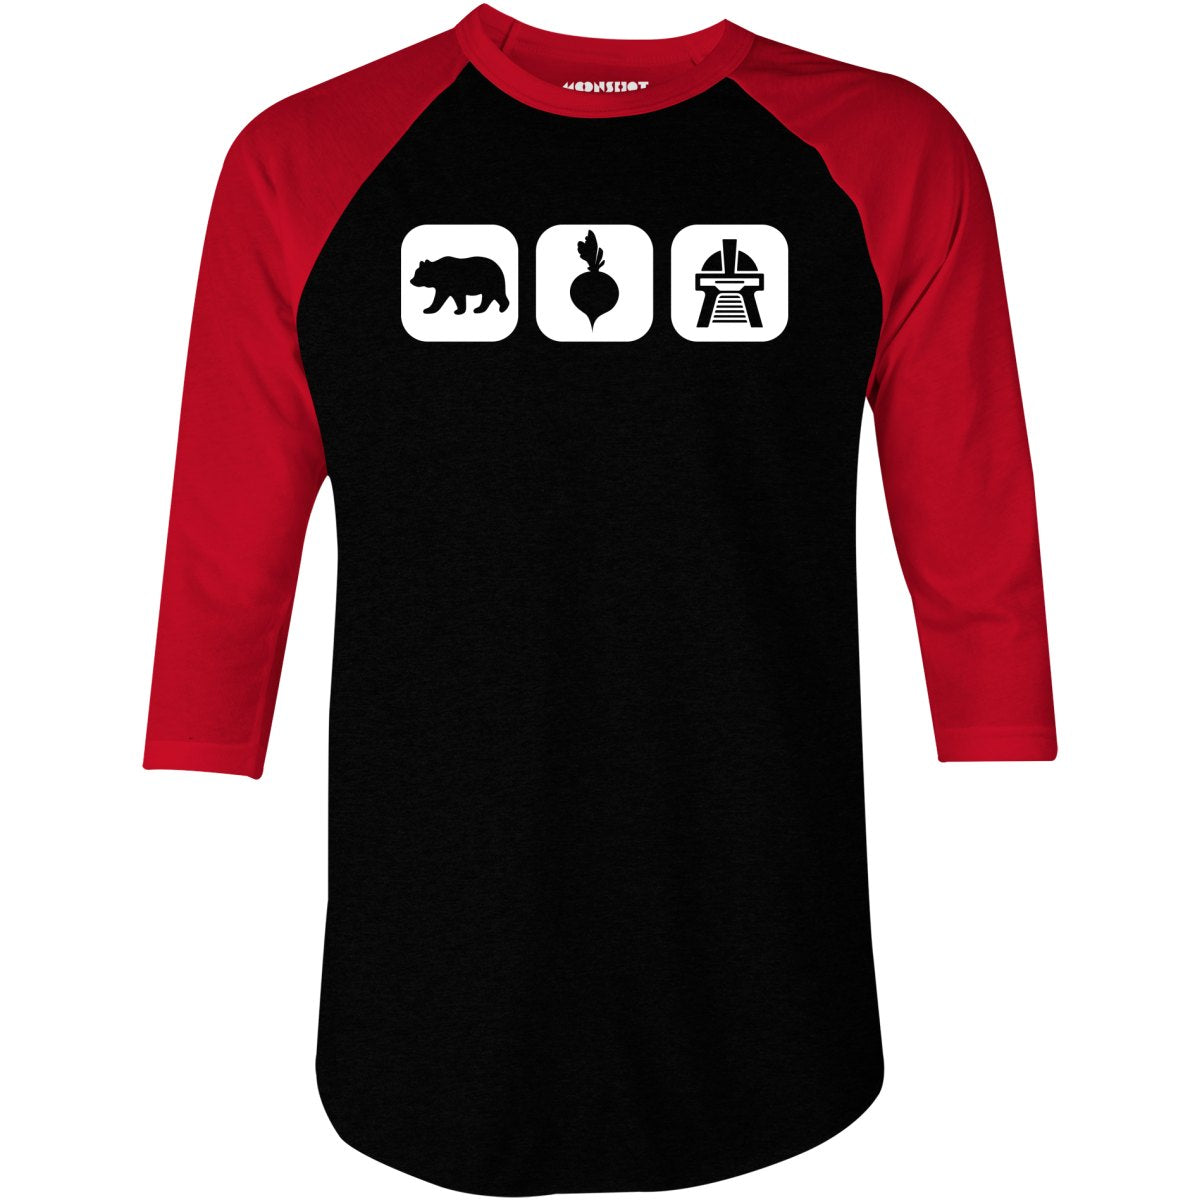 Bears Beets Battlestar Galactica v2 - 3/4 Sleeve Raglan T-Shirt